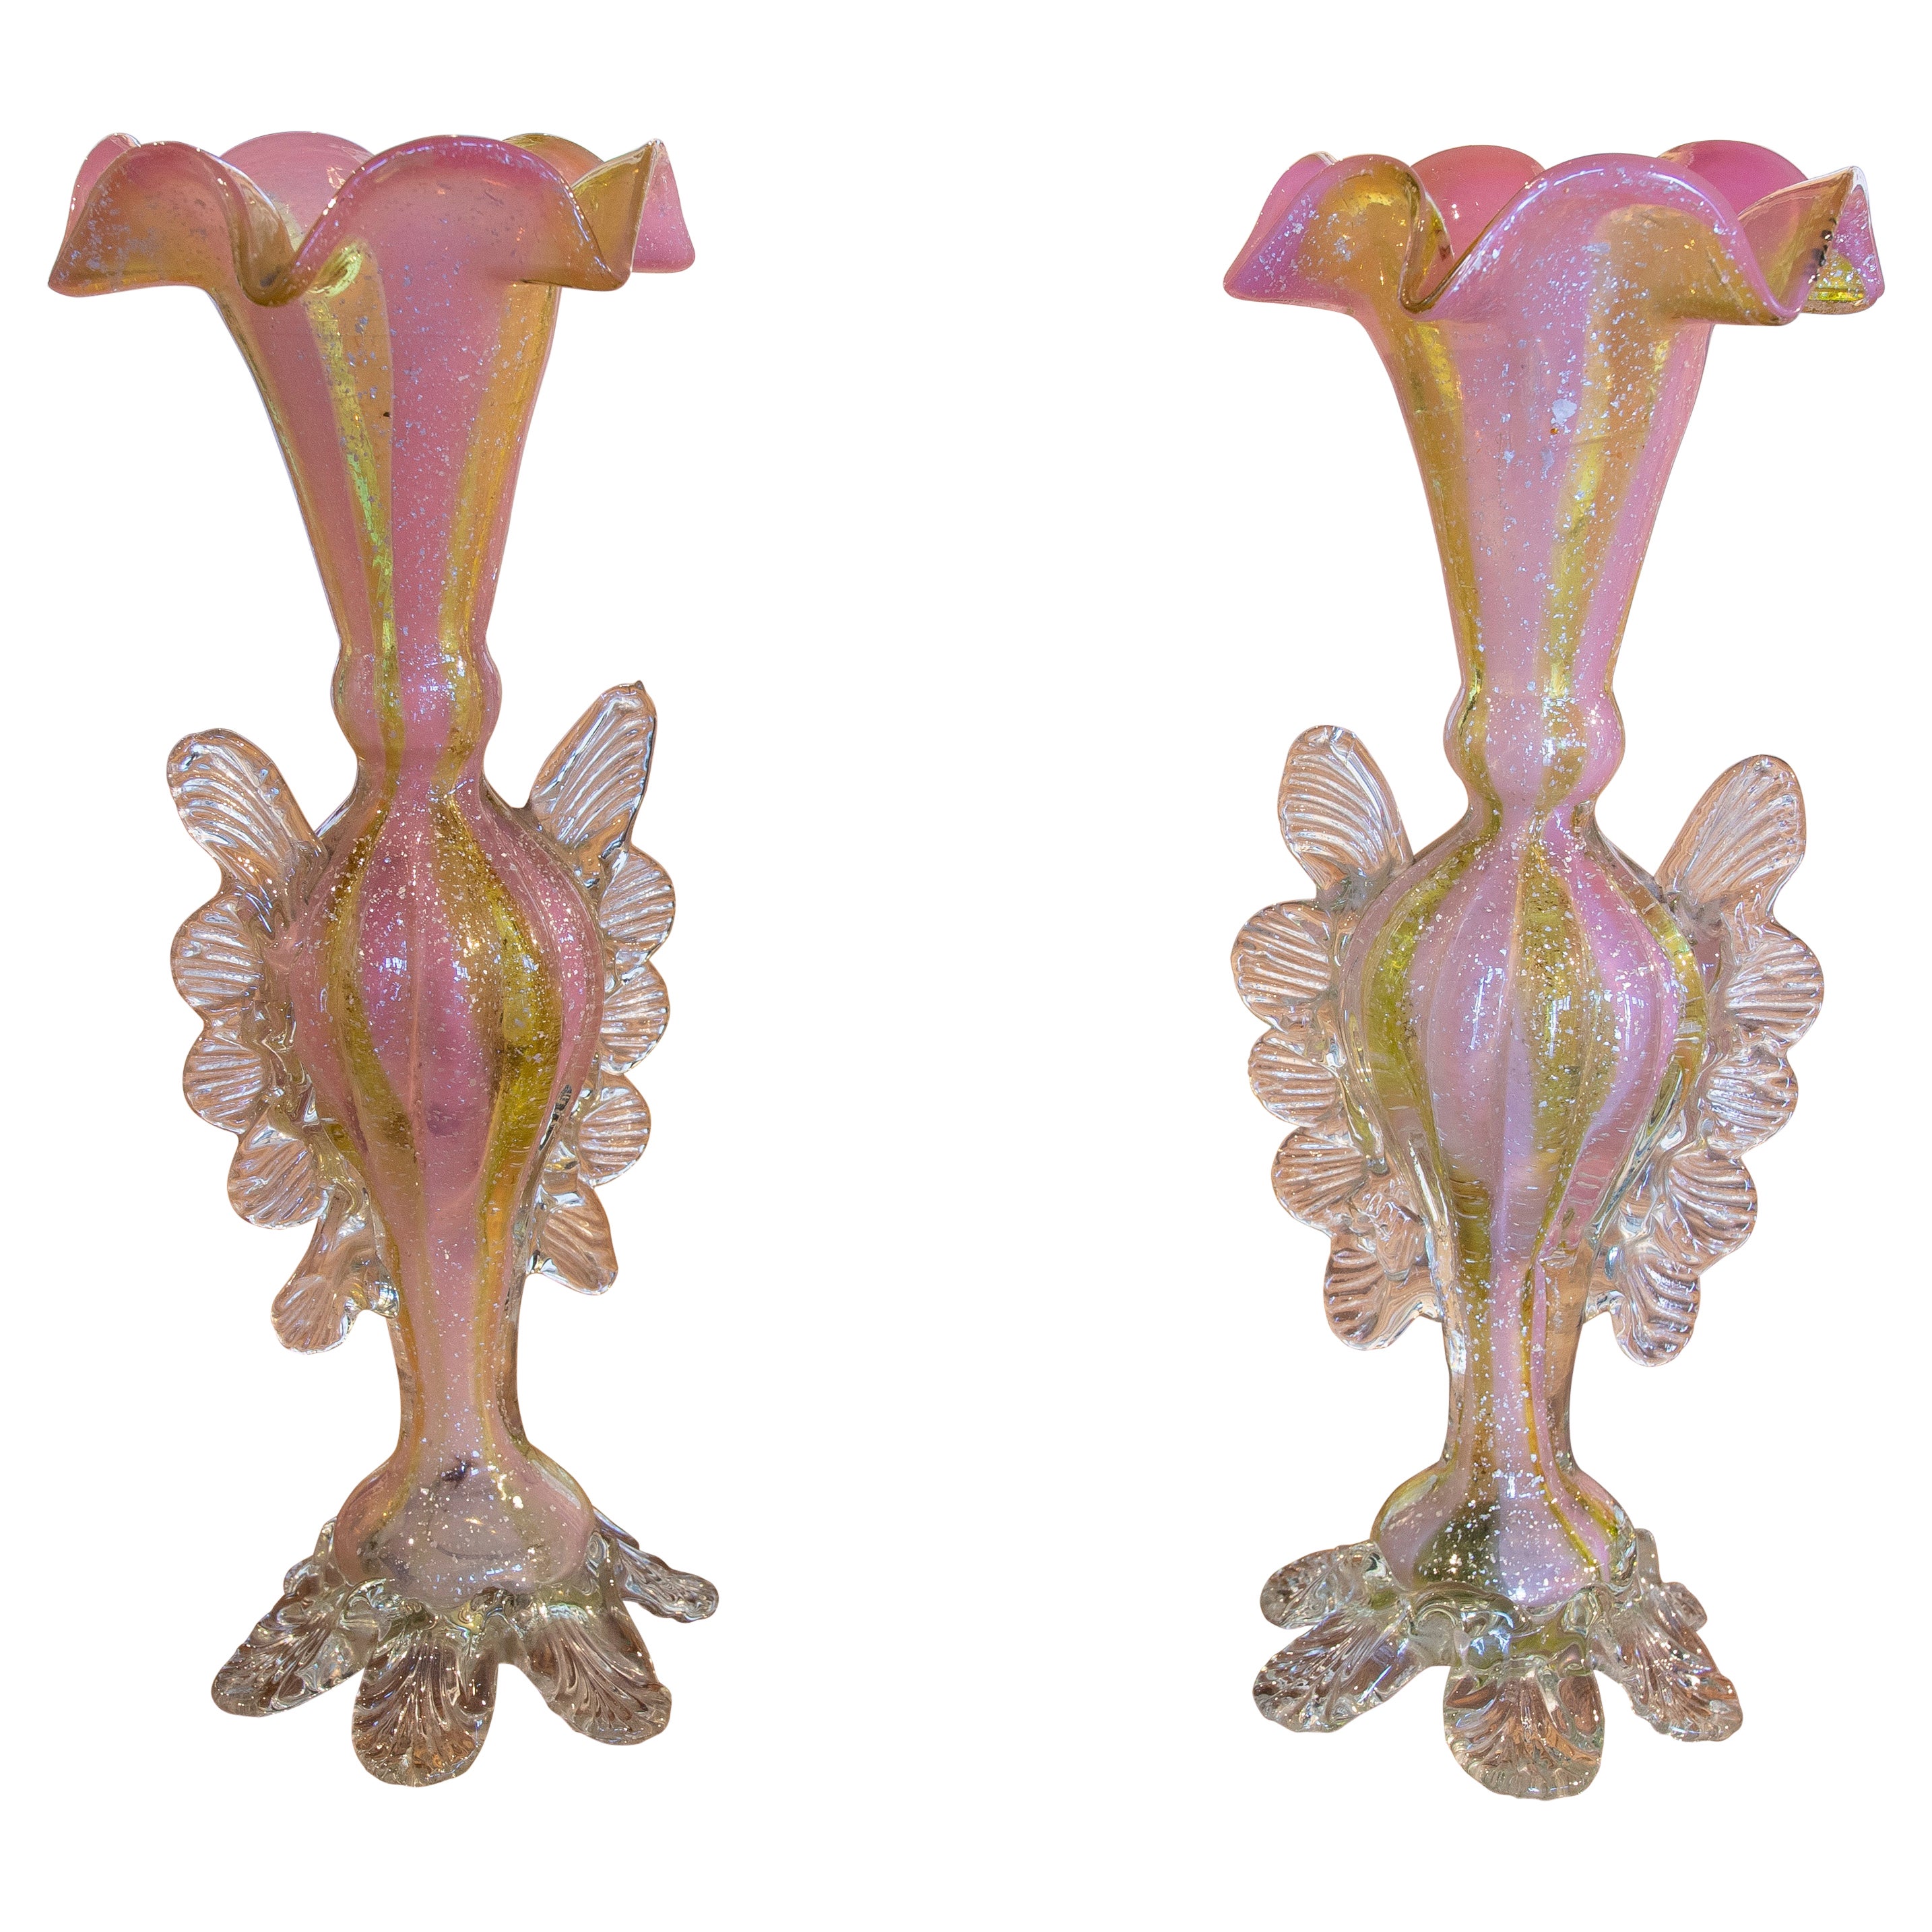 1950s Italian Pair of Murano Glass Vases in Pink Tones 